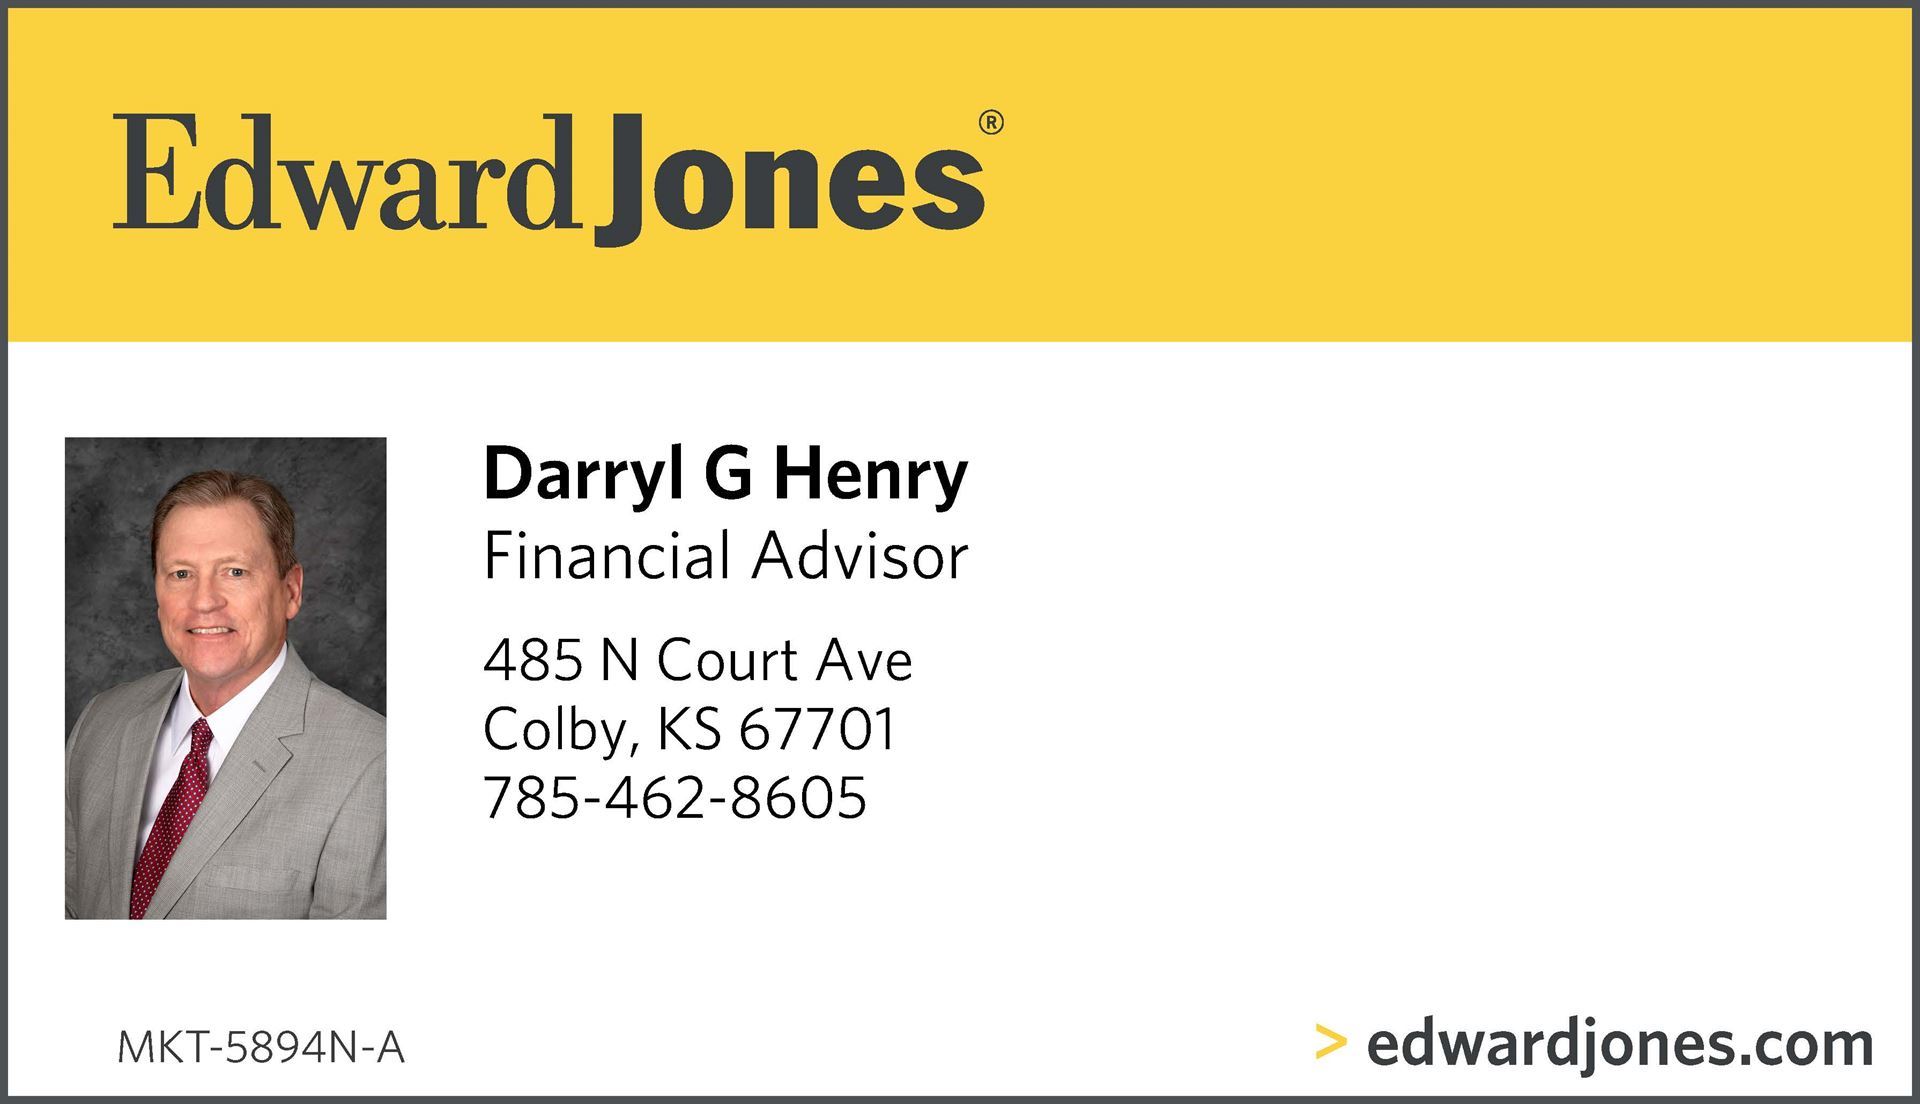 Edward Jones - Darryl Henry